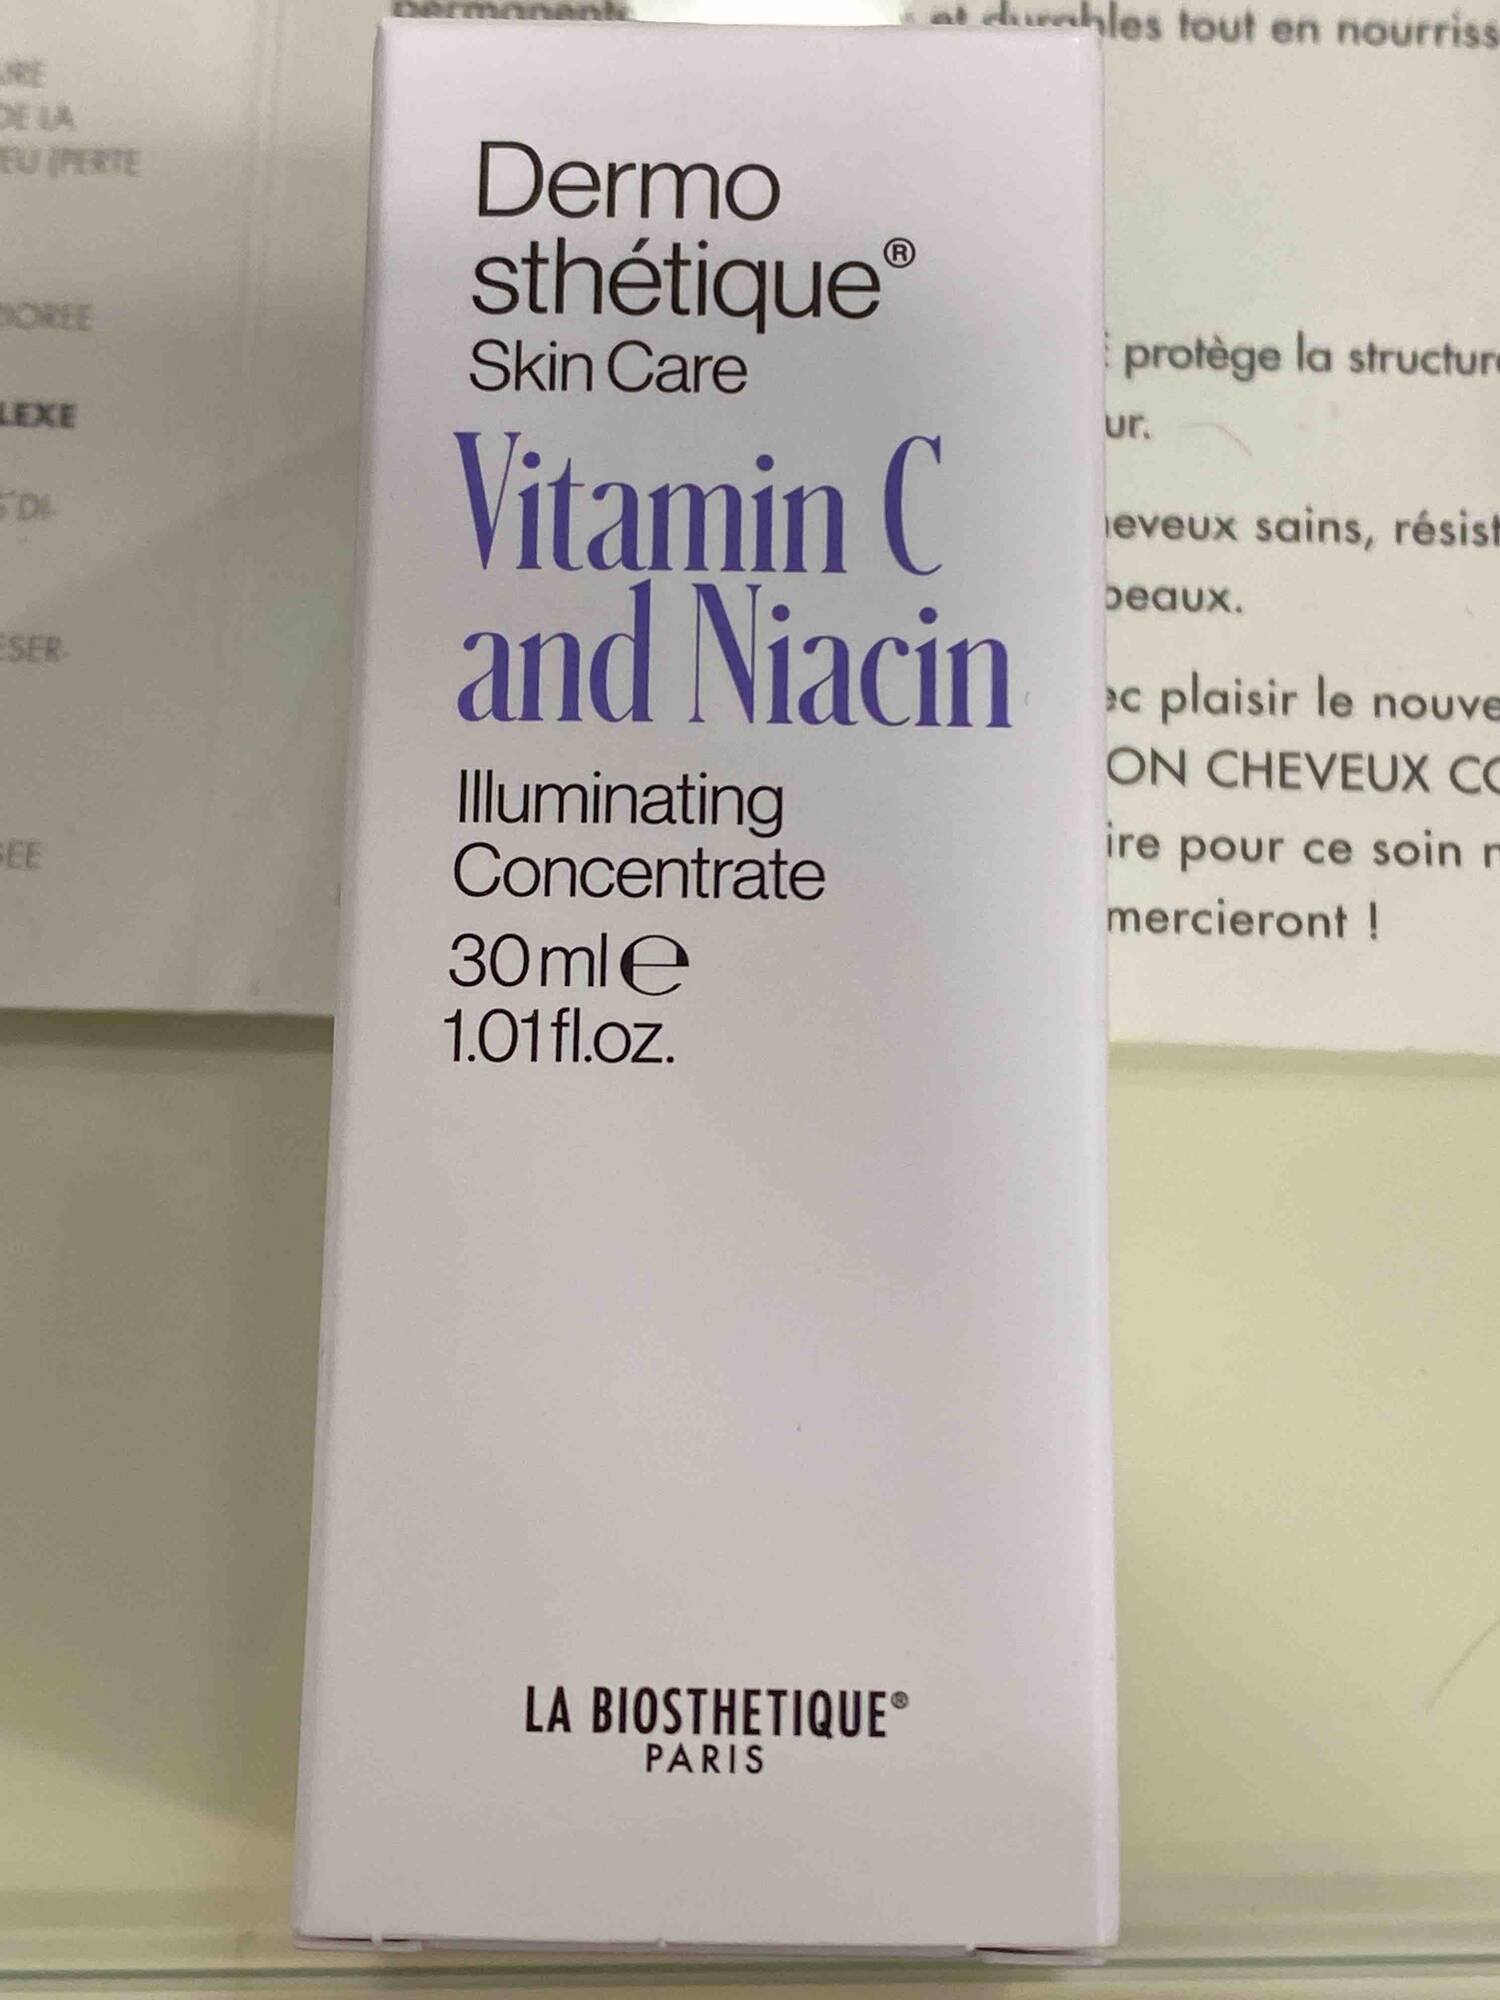 LA BIOSTHETIQUE - Dermosthétique Vitamin C and Niacin - Illuminating concentrate